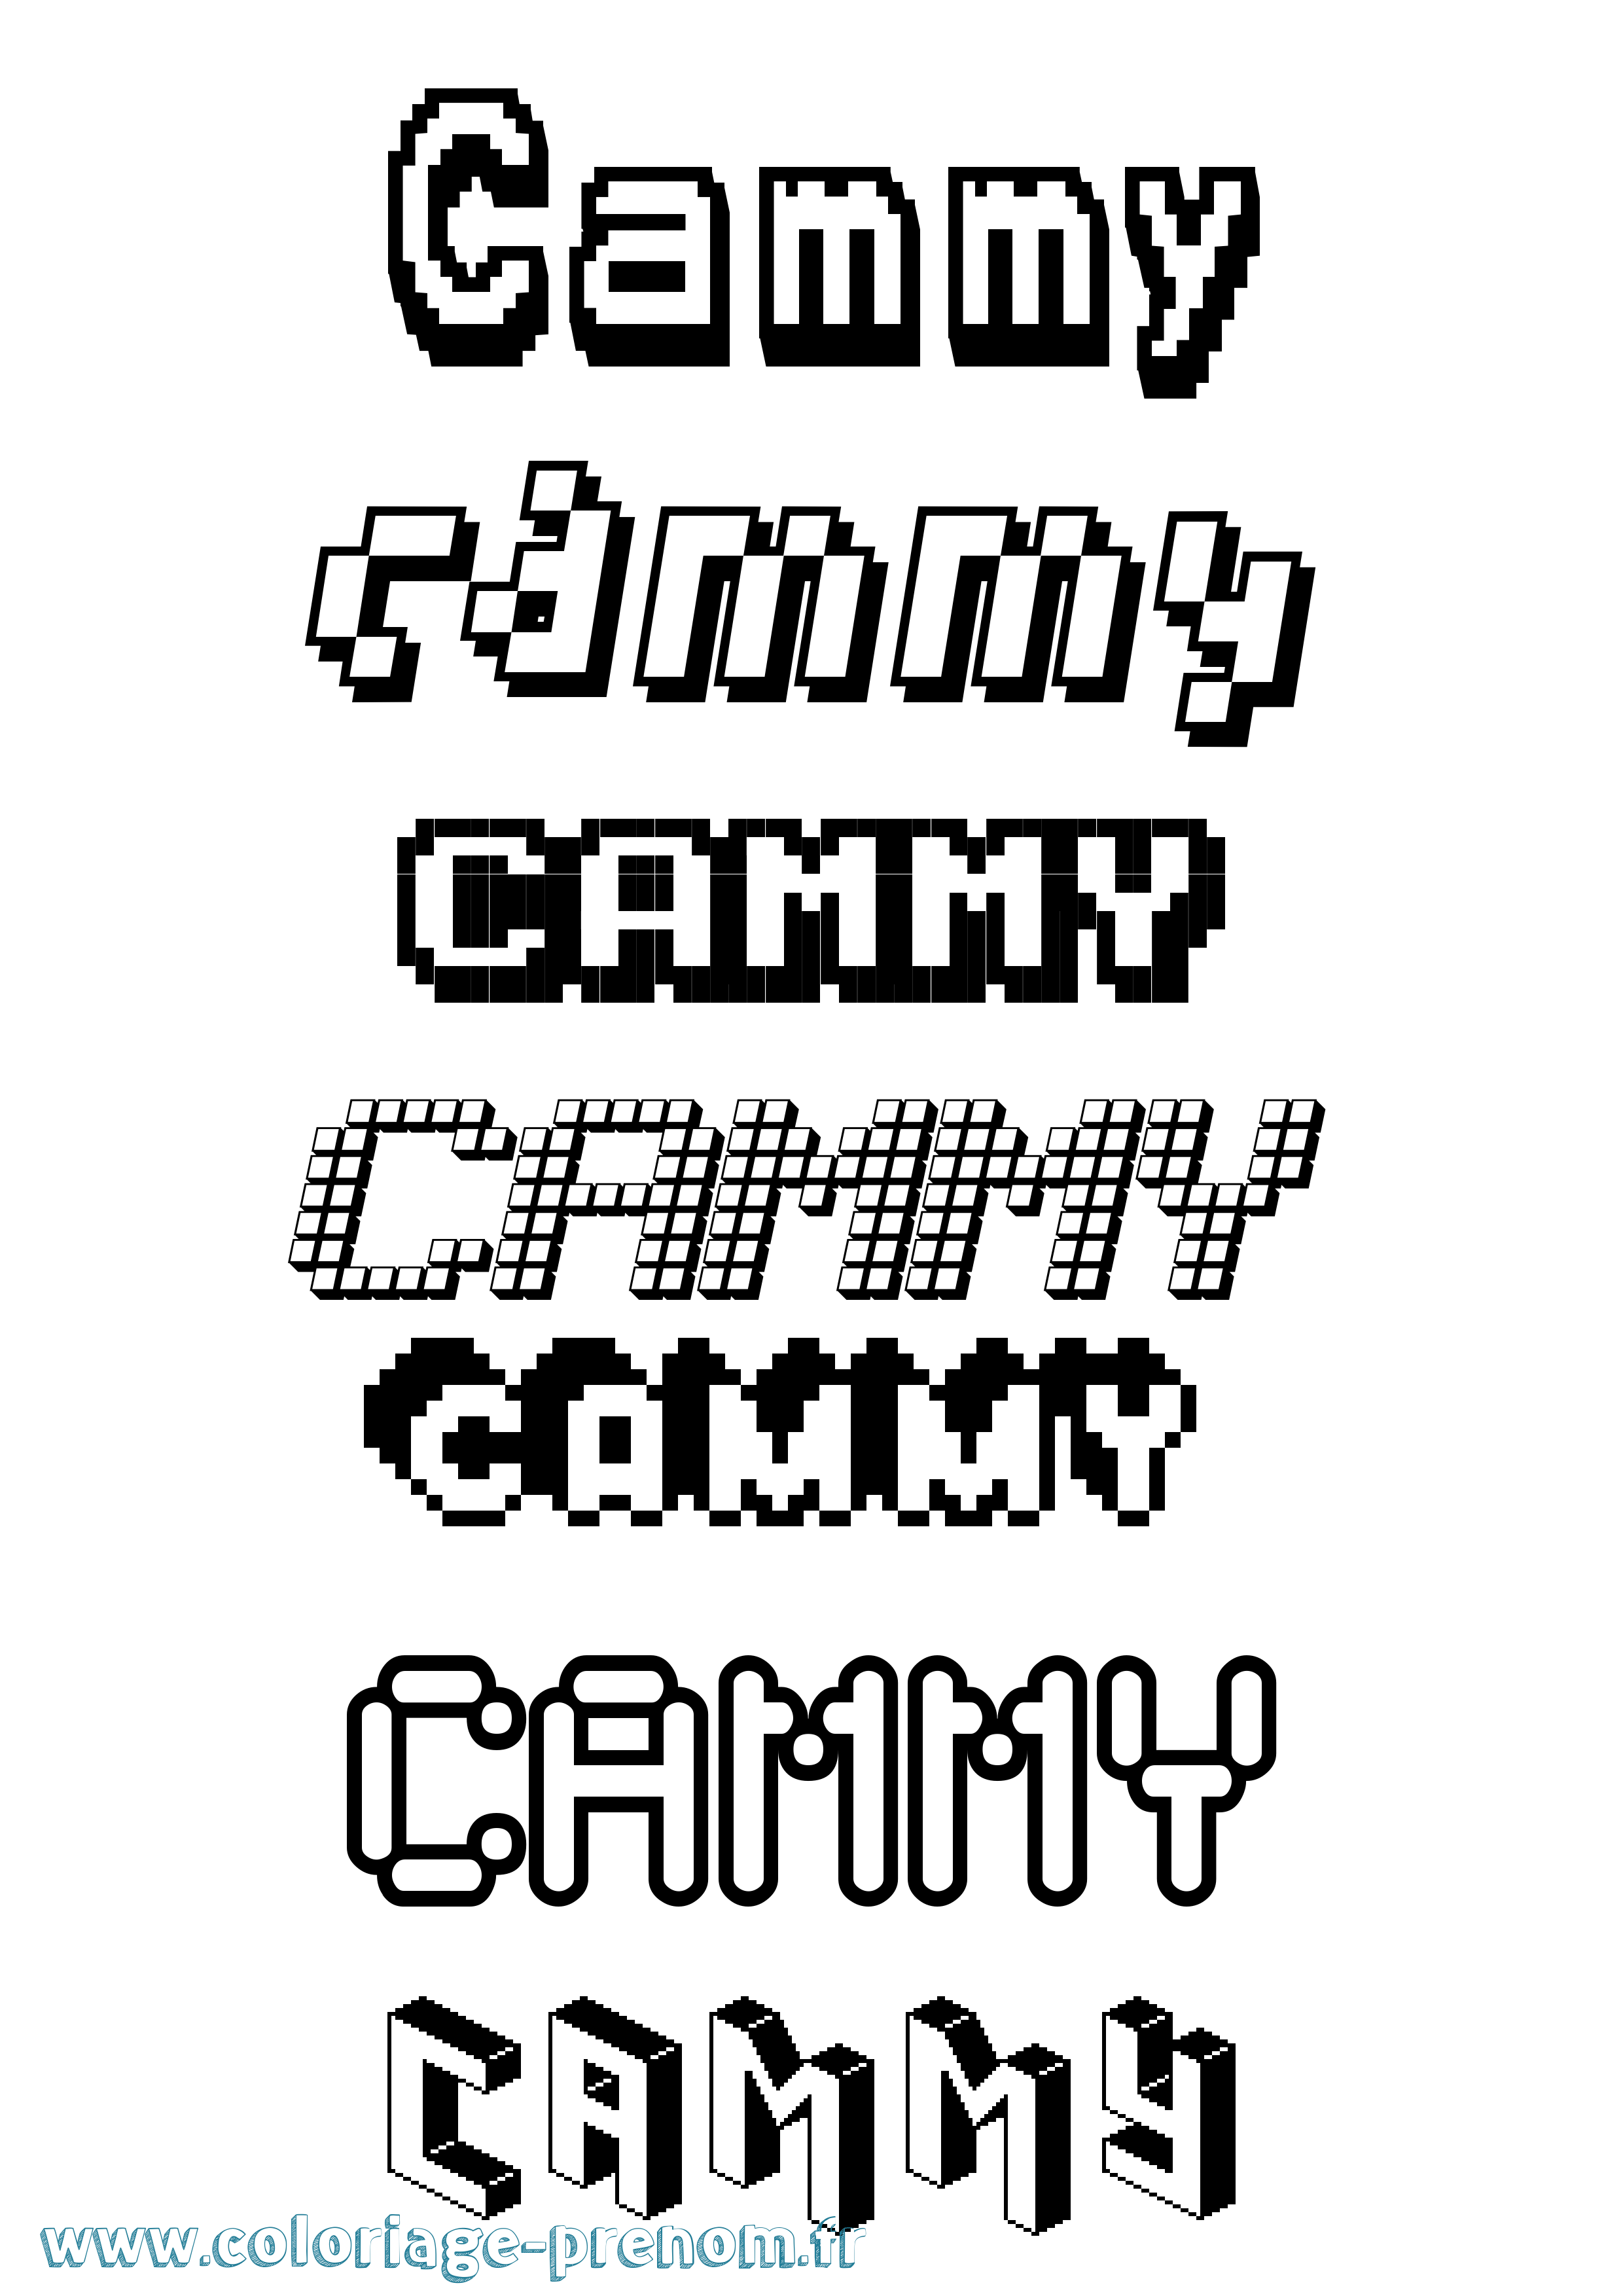 Coloriage prénom Cammy Pixel